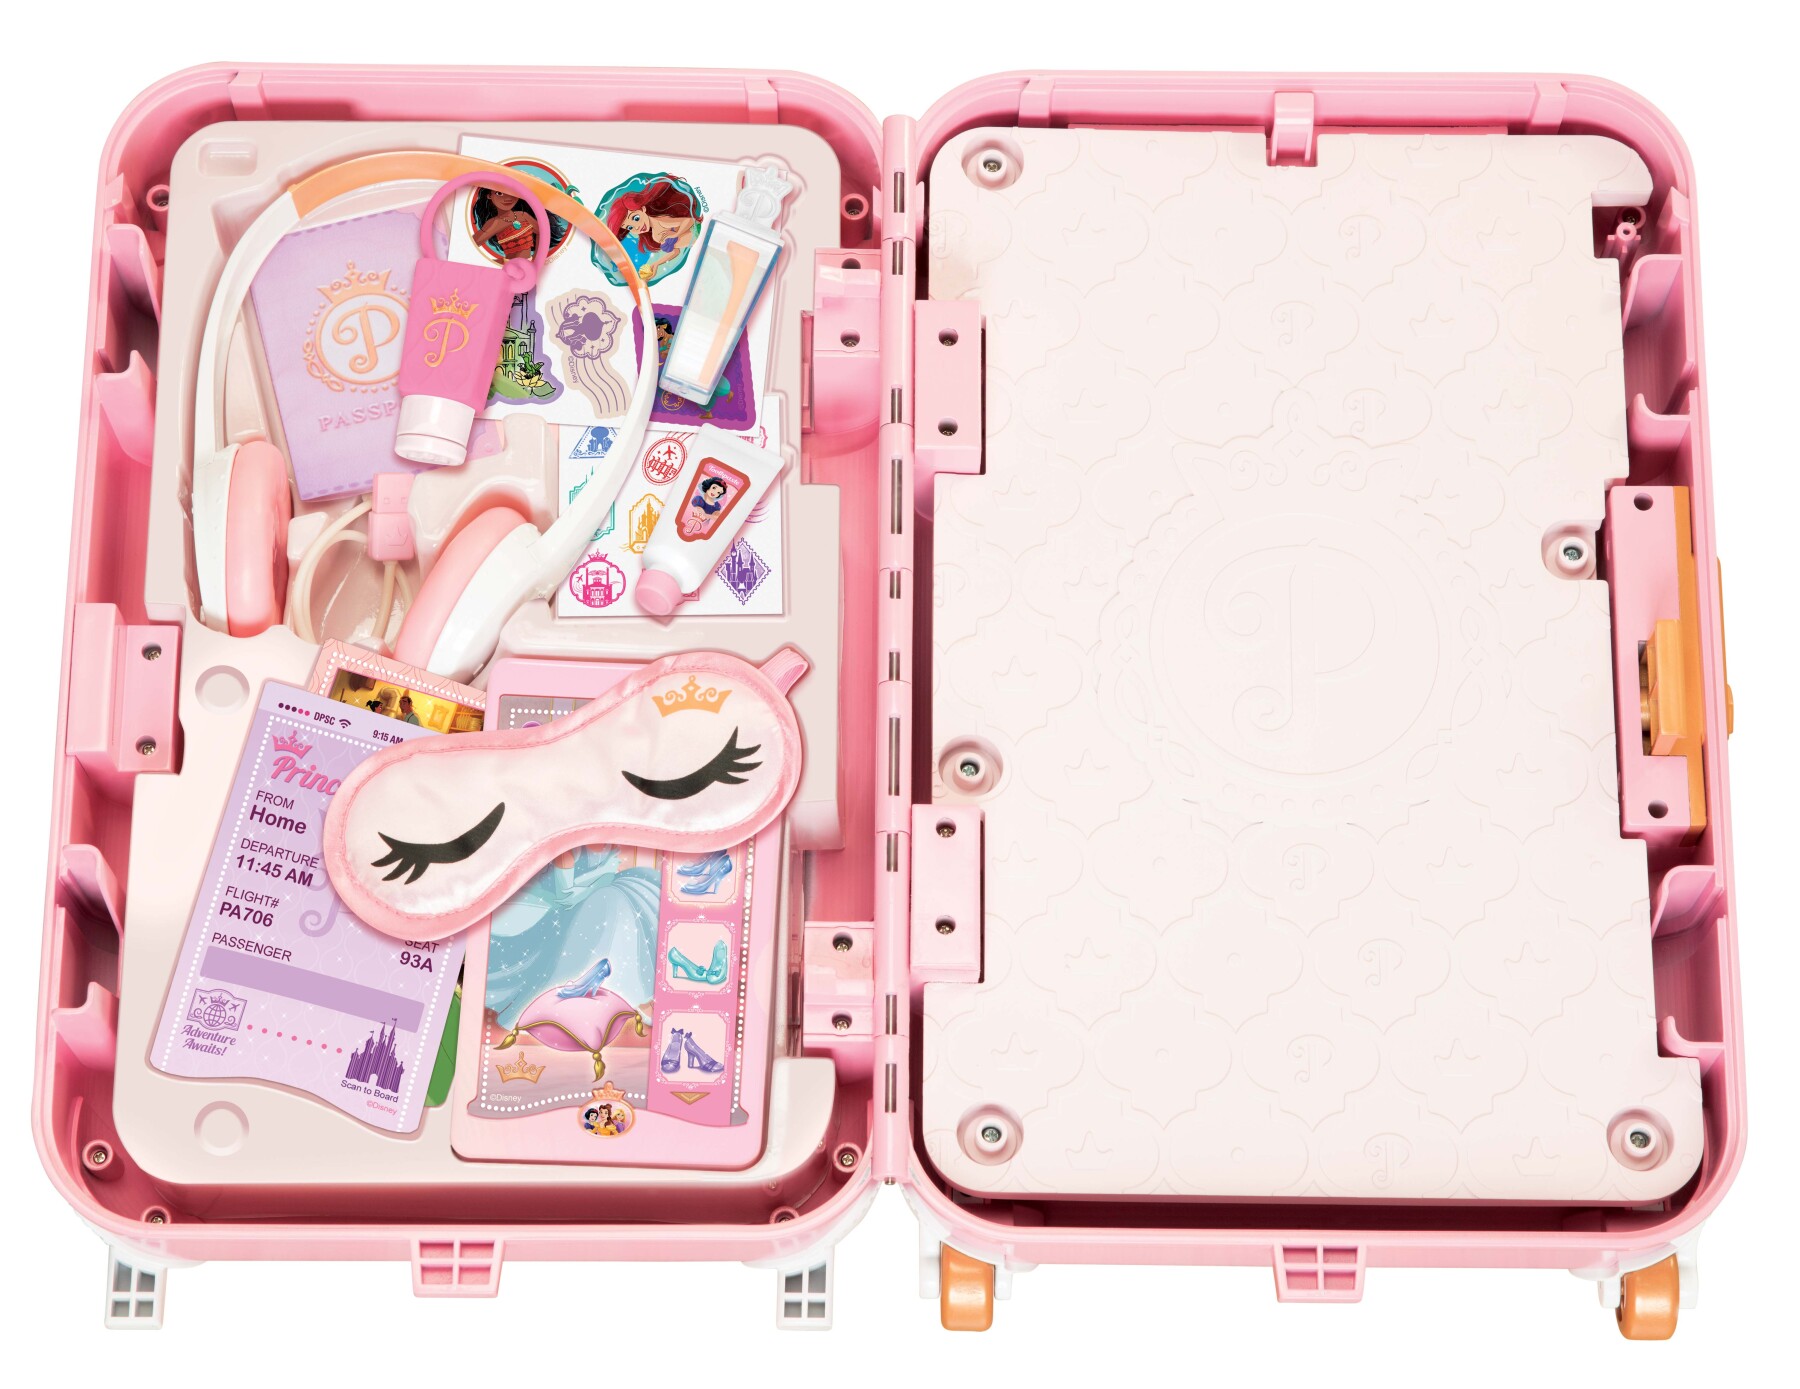 Disney princess style collection trolley deluxe con tablet e accessori - DISNEY PRINCESS